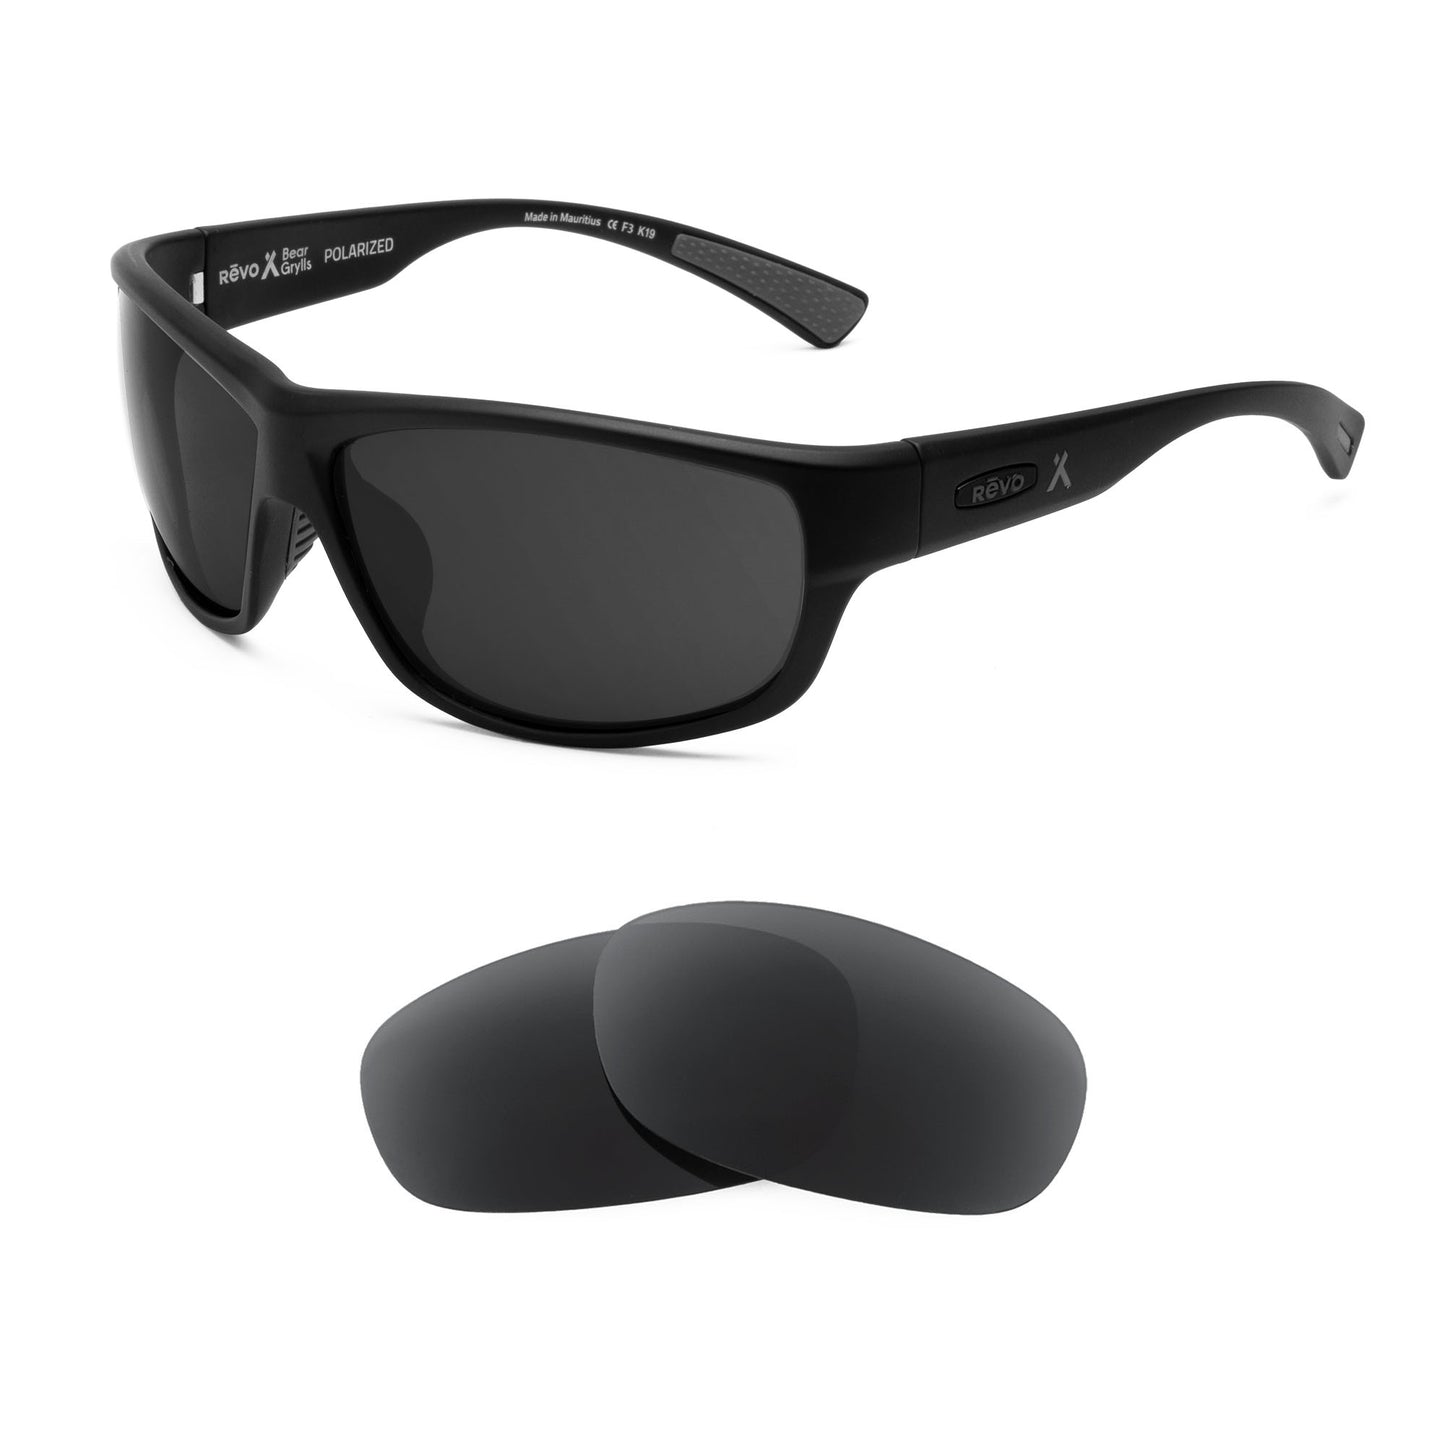 Revo Caper sunglasses with replacement lenses